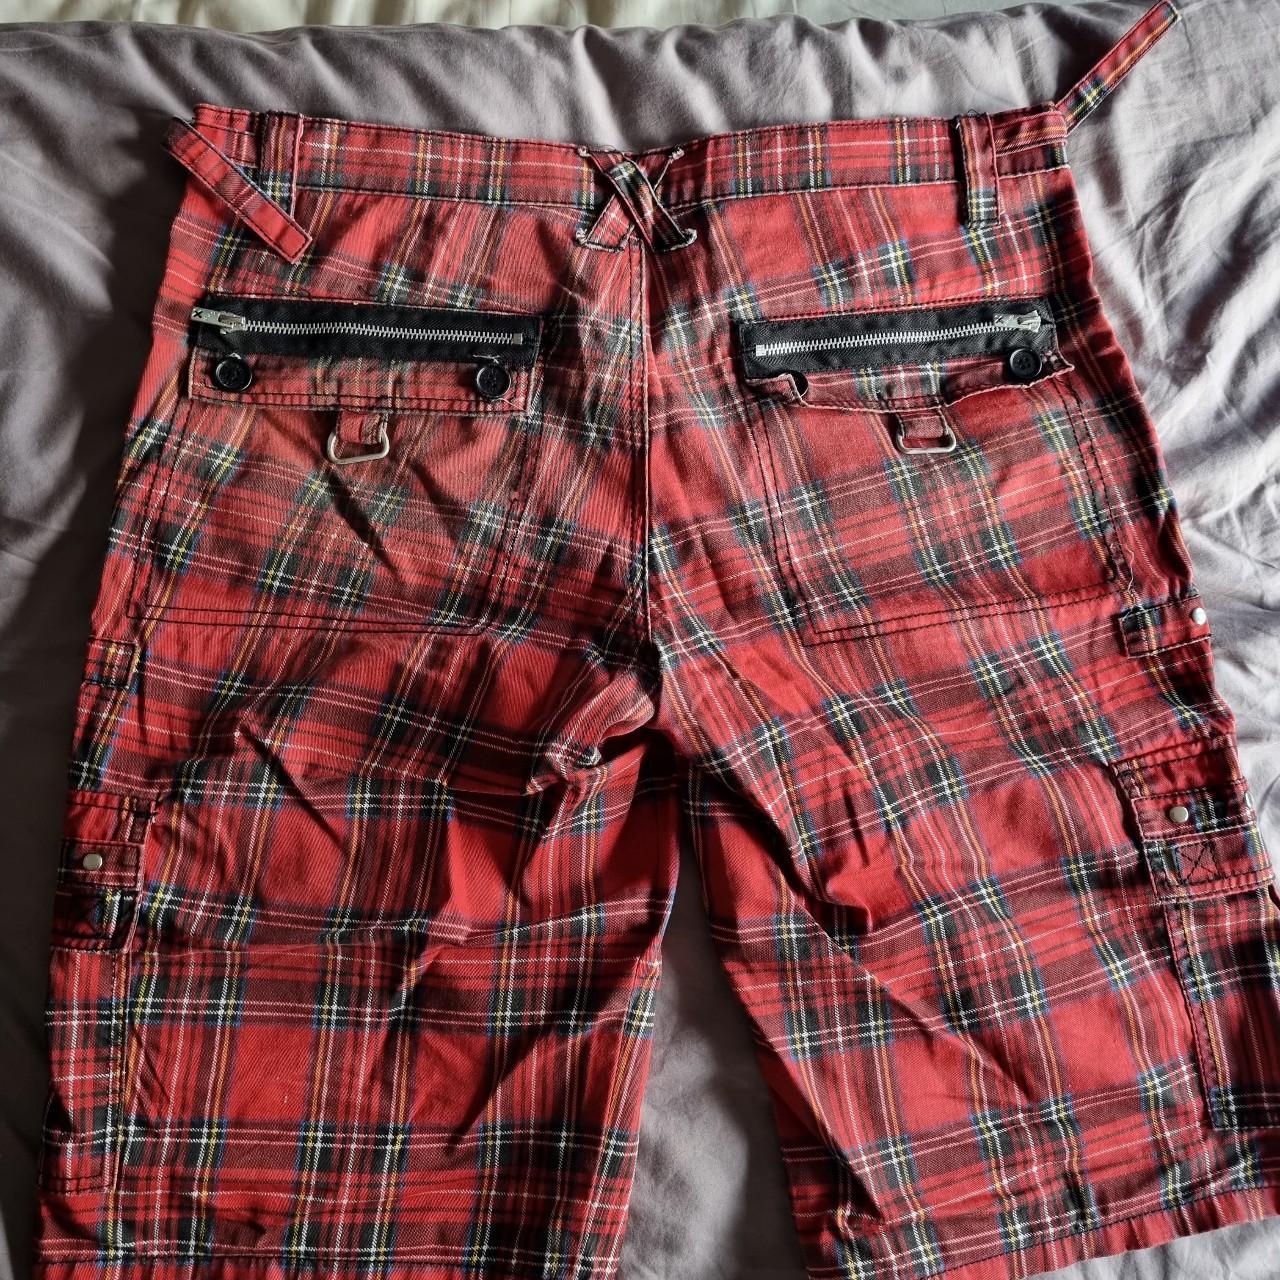 Tripp NYC punk goth tartan bondage shorts, size 34